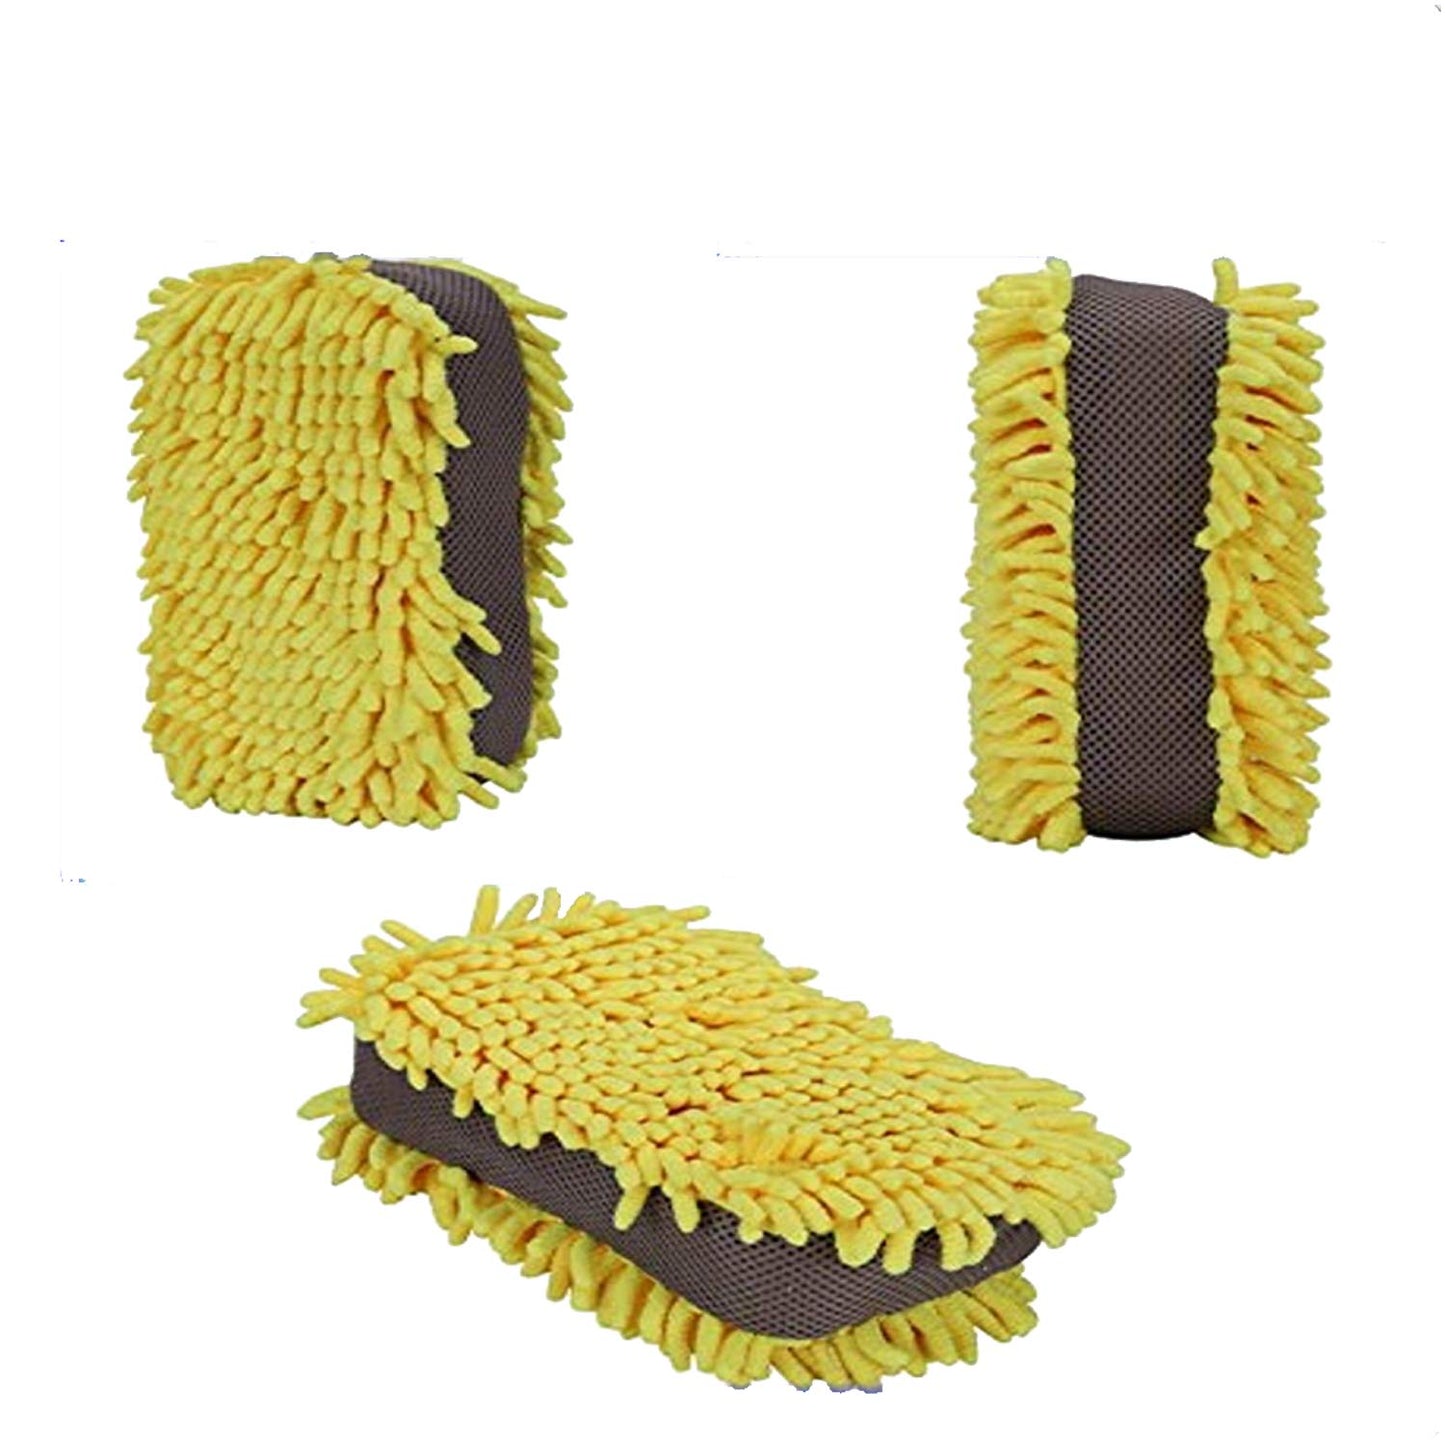 CAR SAAZ® Super Large Microfiber Sponge Sandwich Design